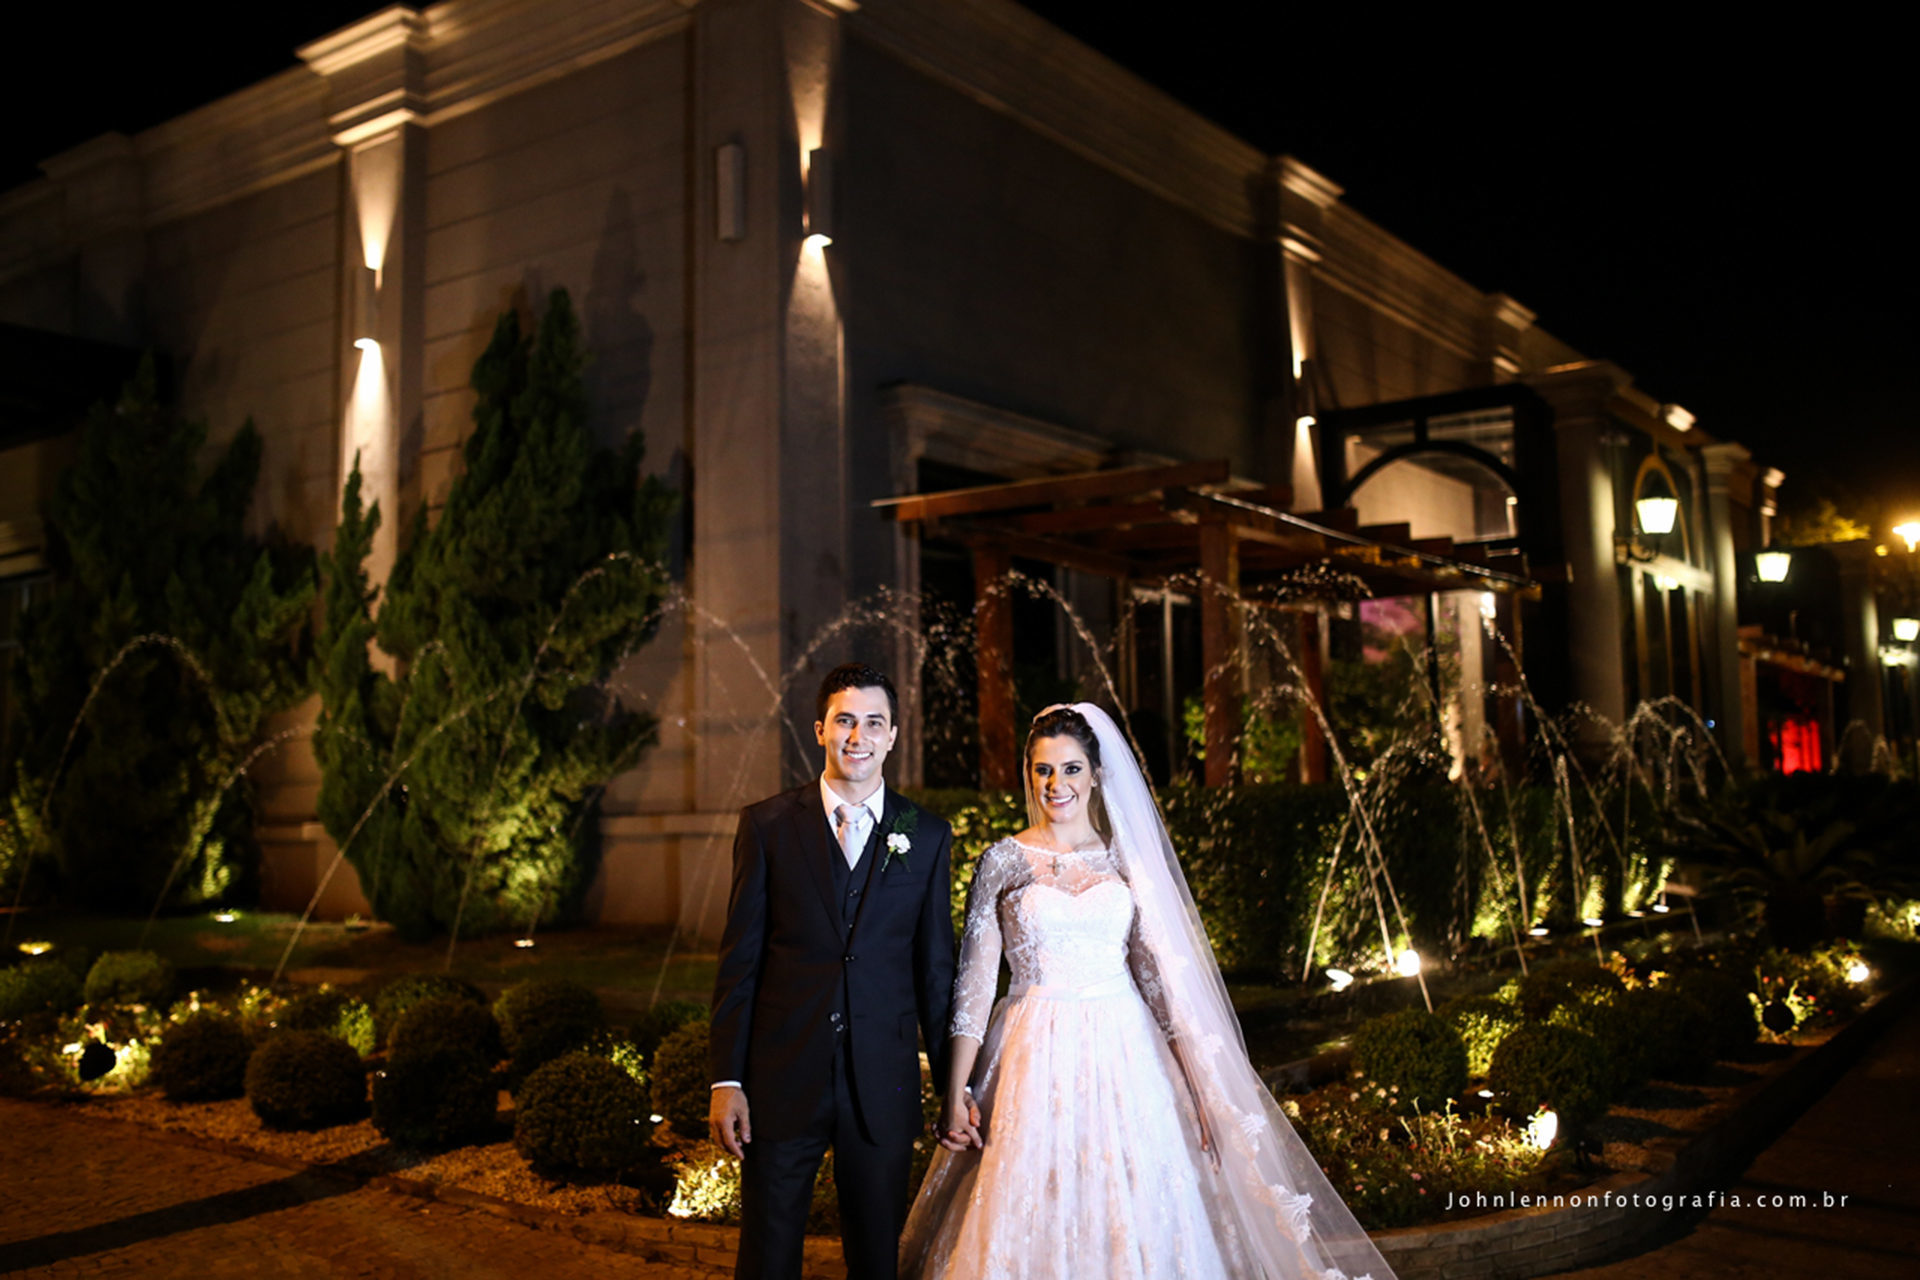 Casamento Ana Beatriz & Guilherme - São José do Rio Preto - SP 17.10.2015